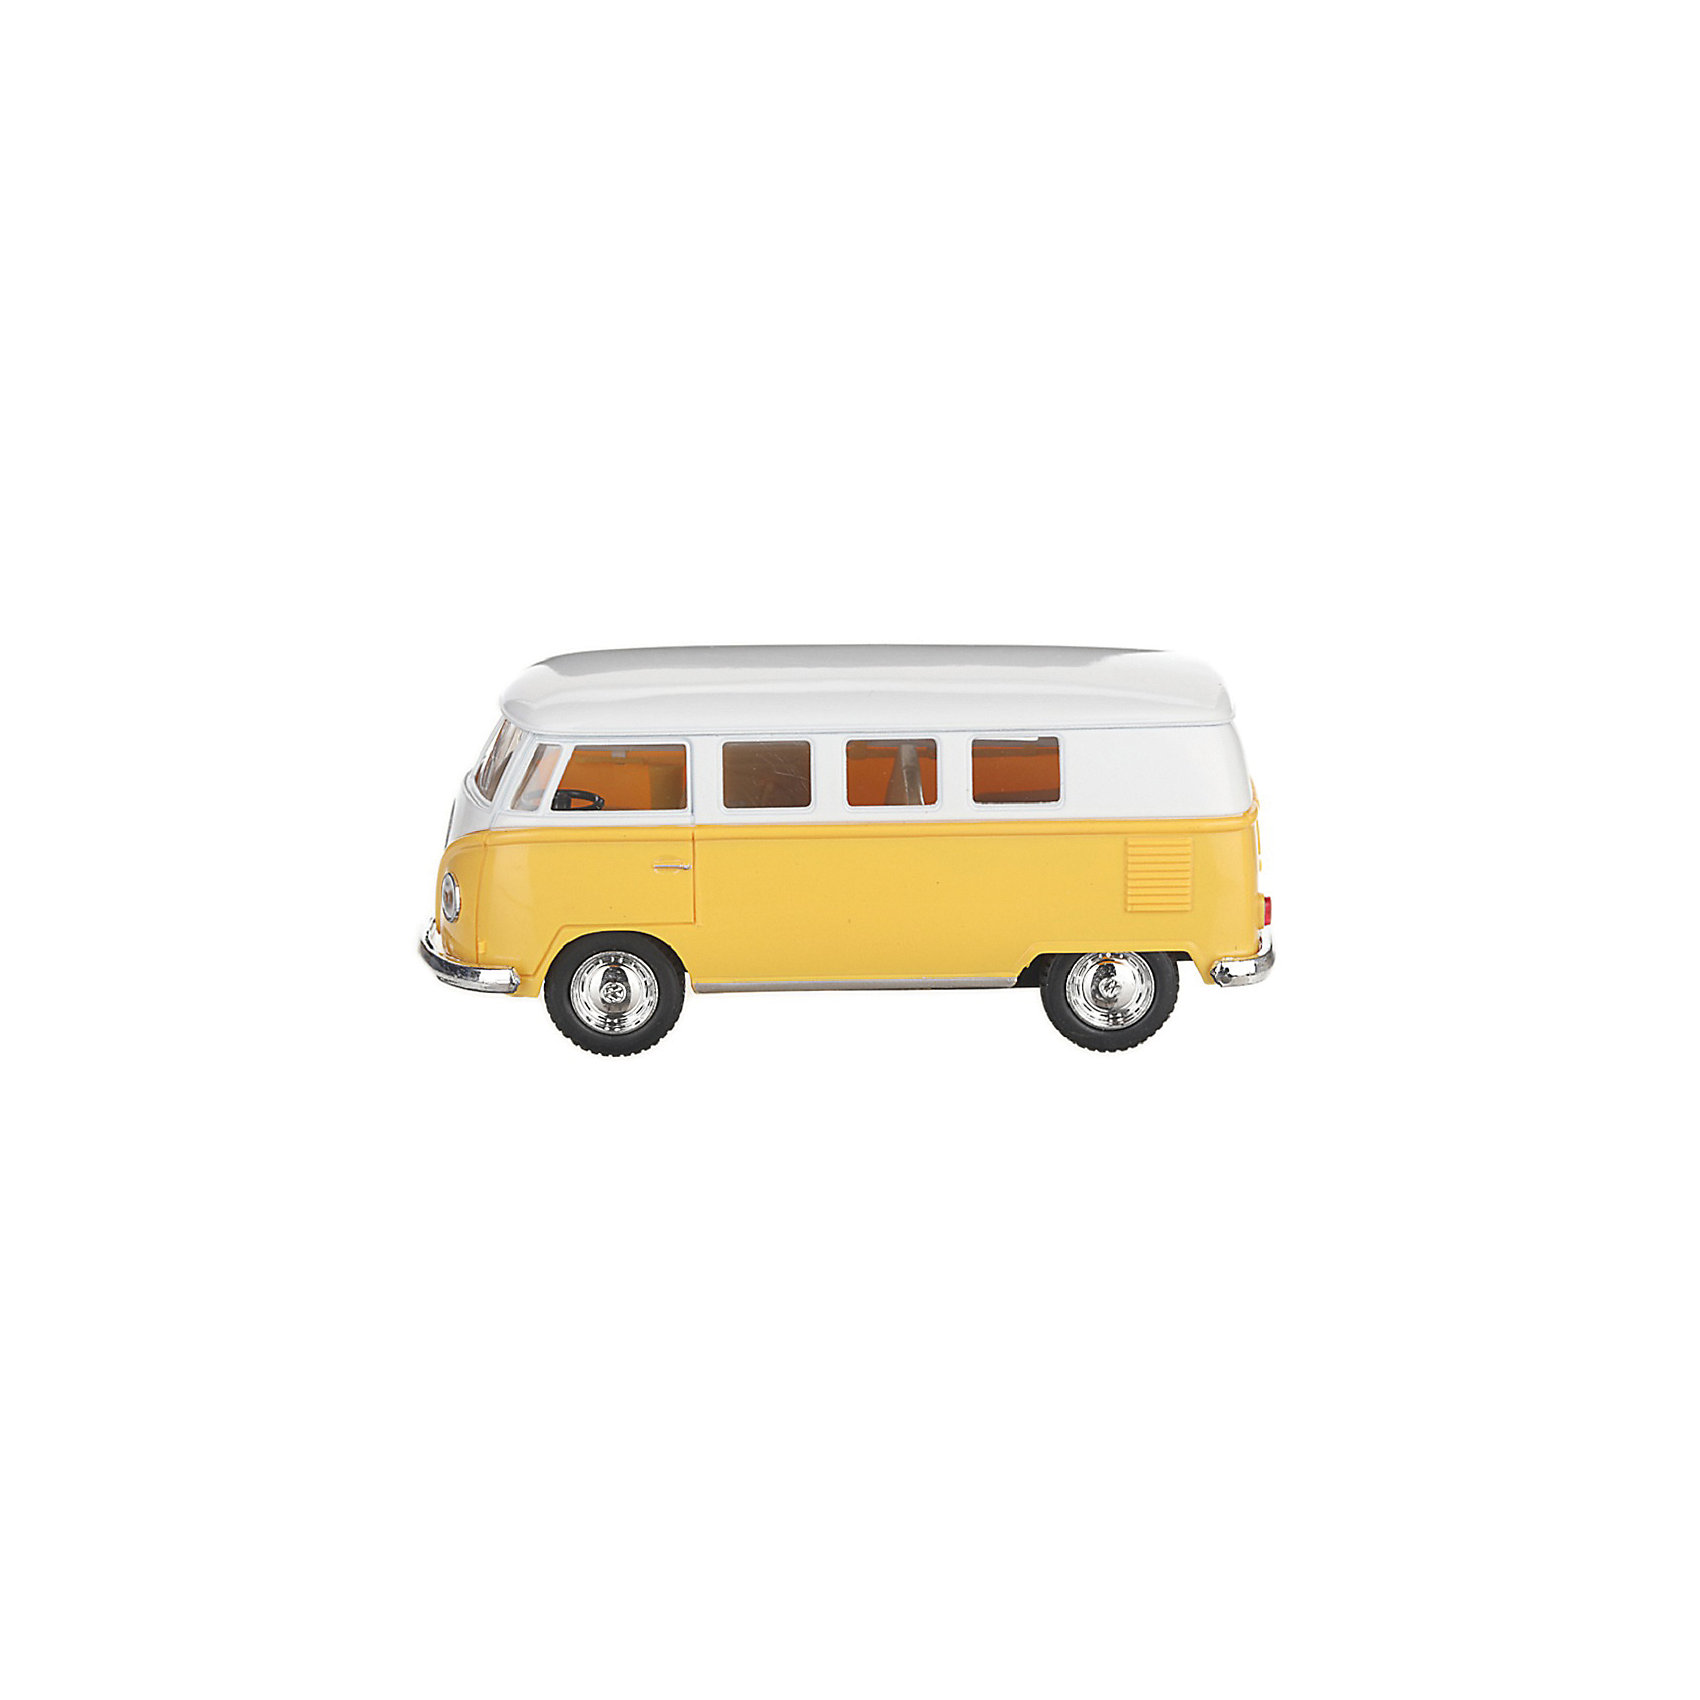 фото Металлический автобус Serinity Toys Volkswagen Classical, жёлтый